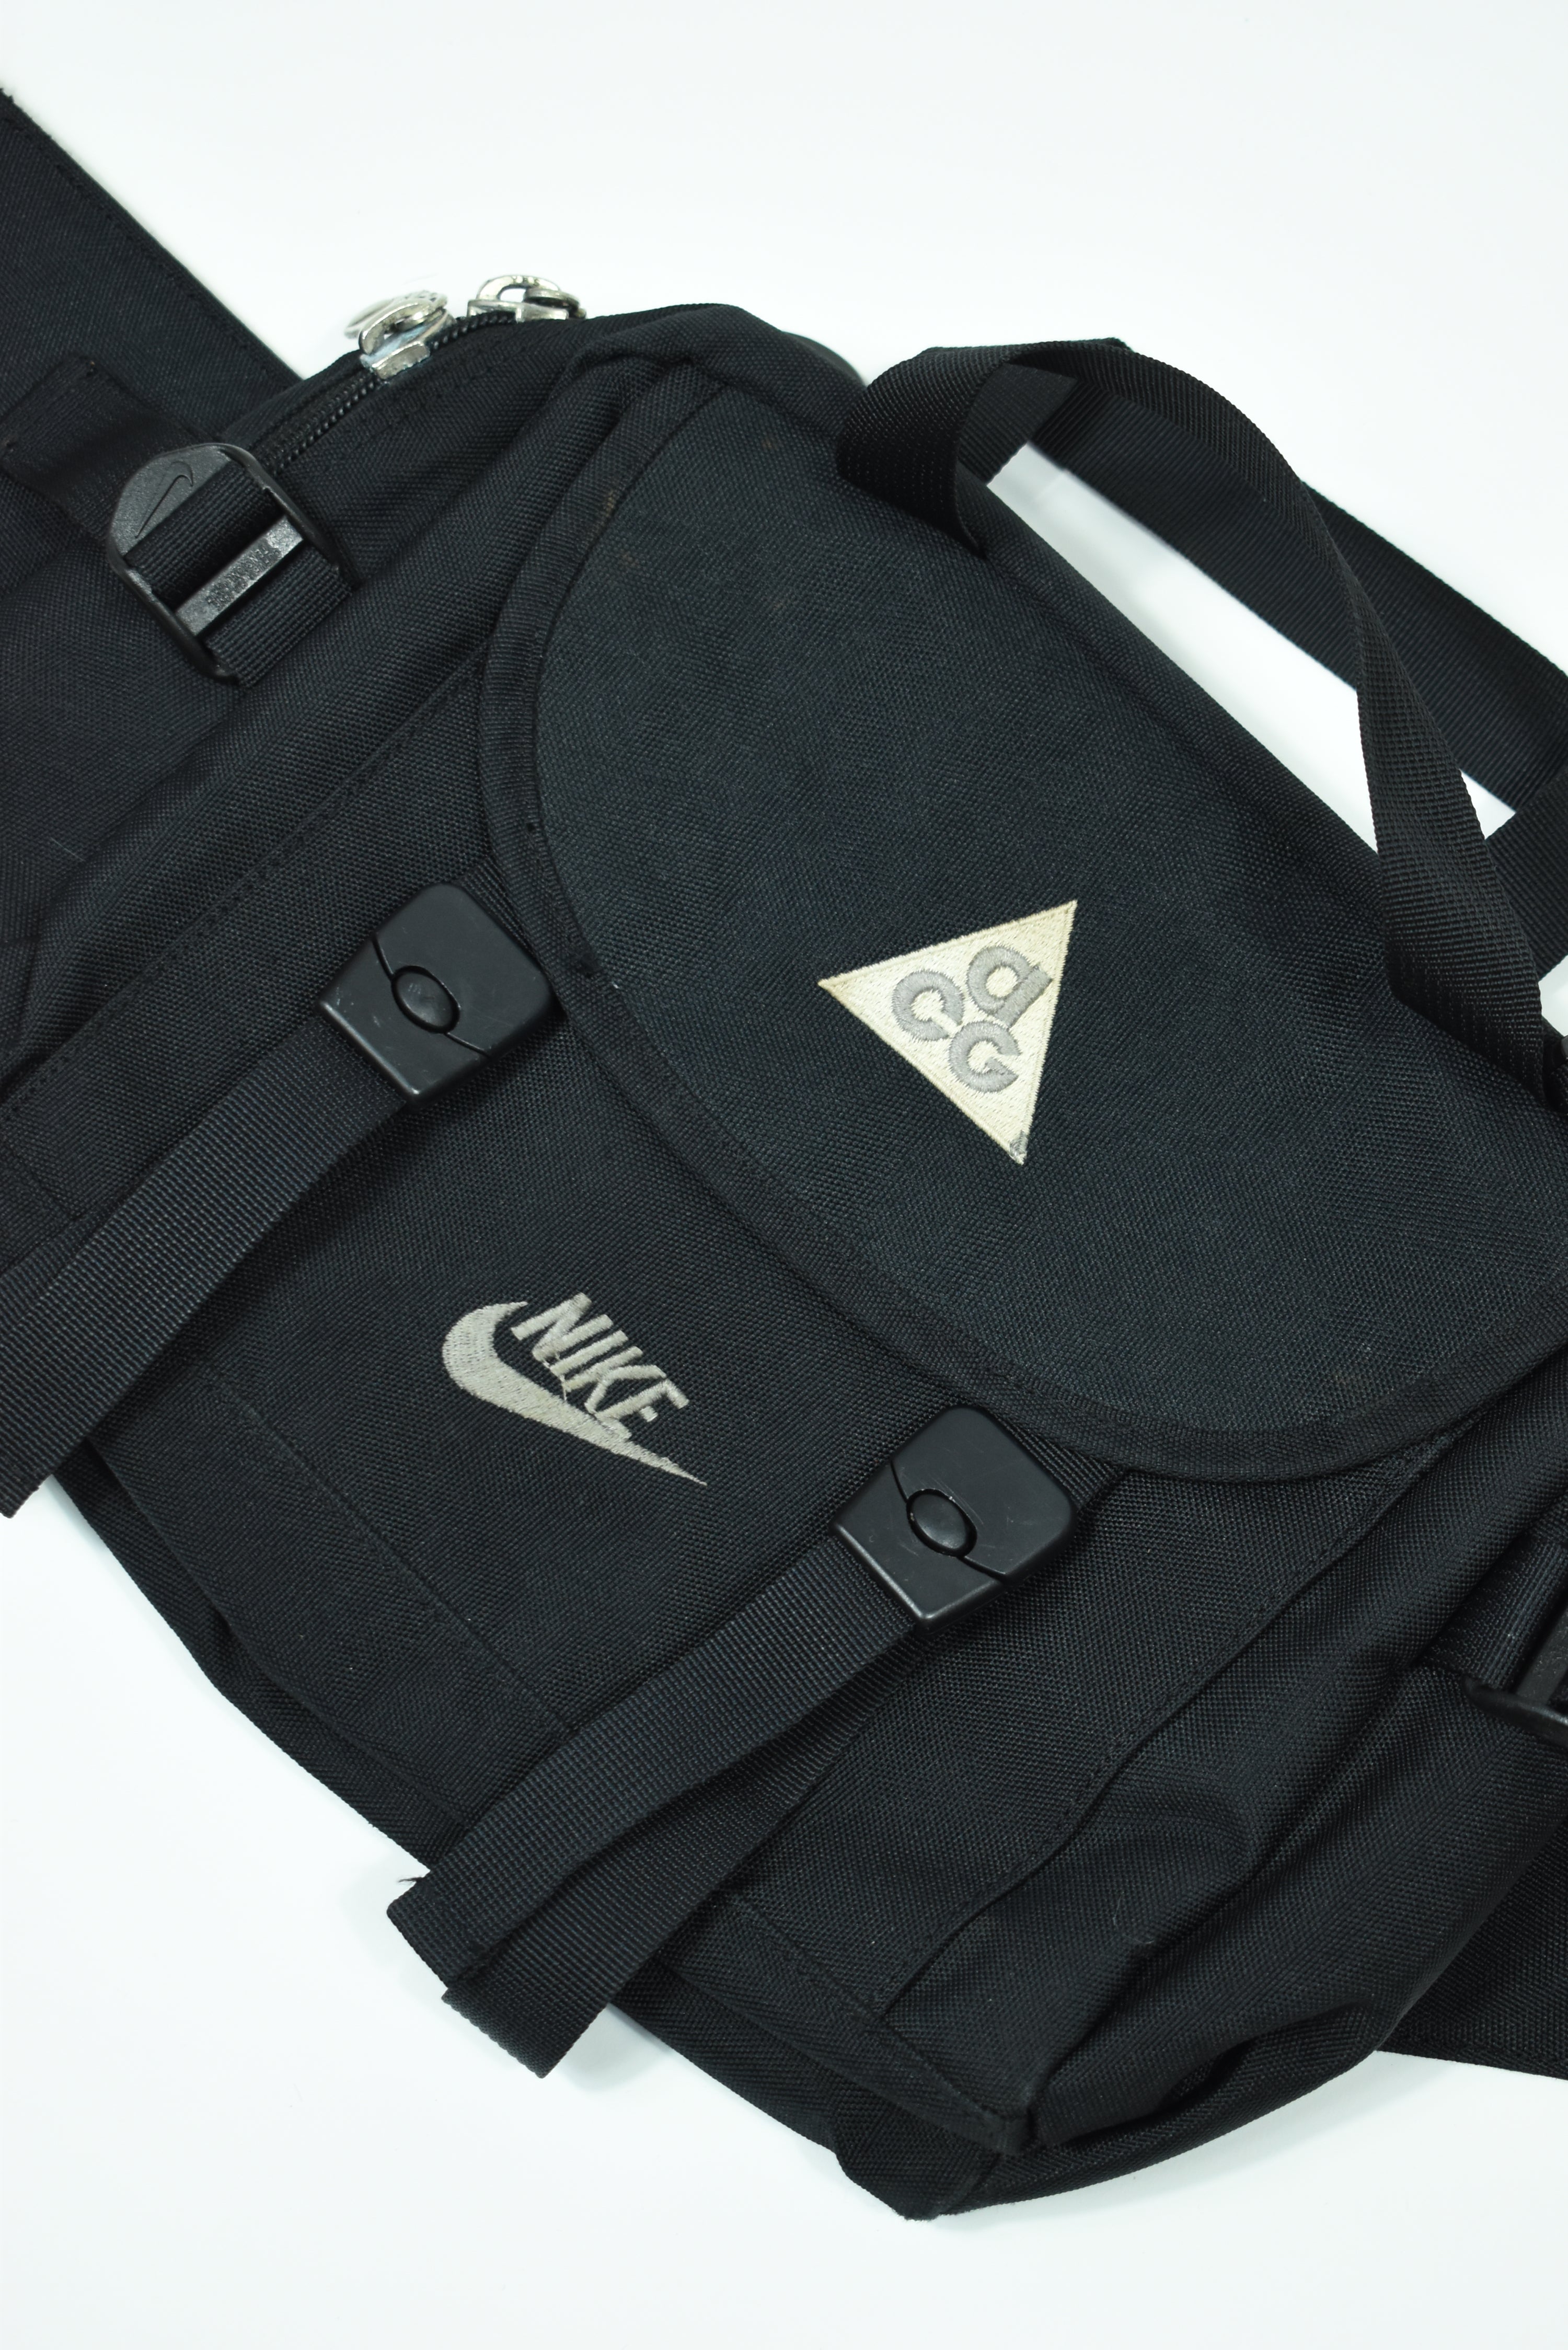 Vintage Nike ACG Tactical Bag OS